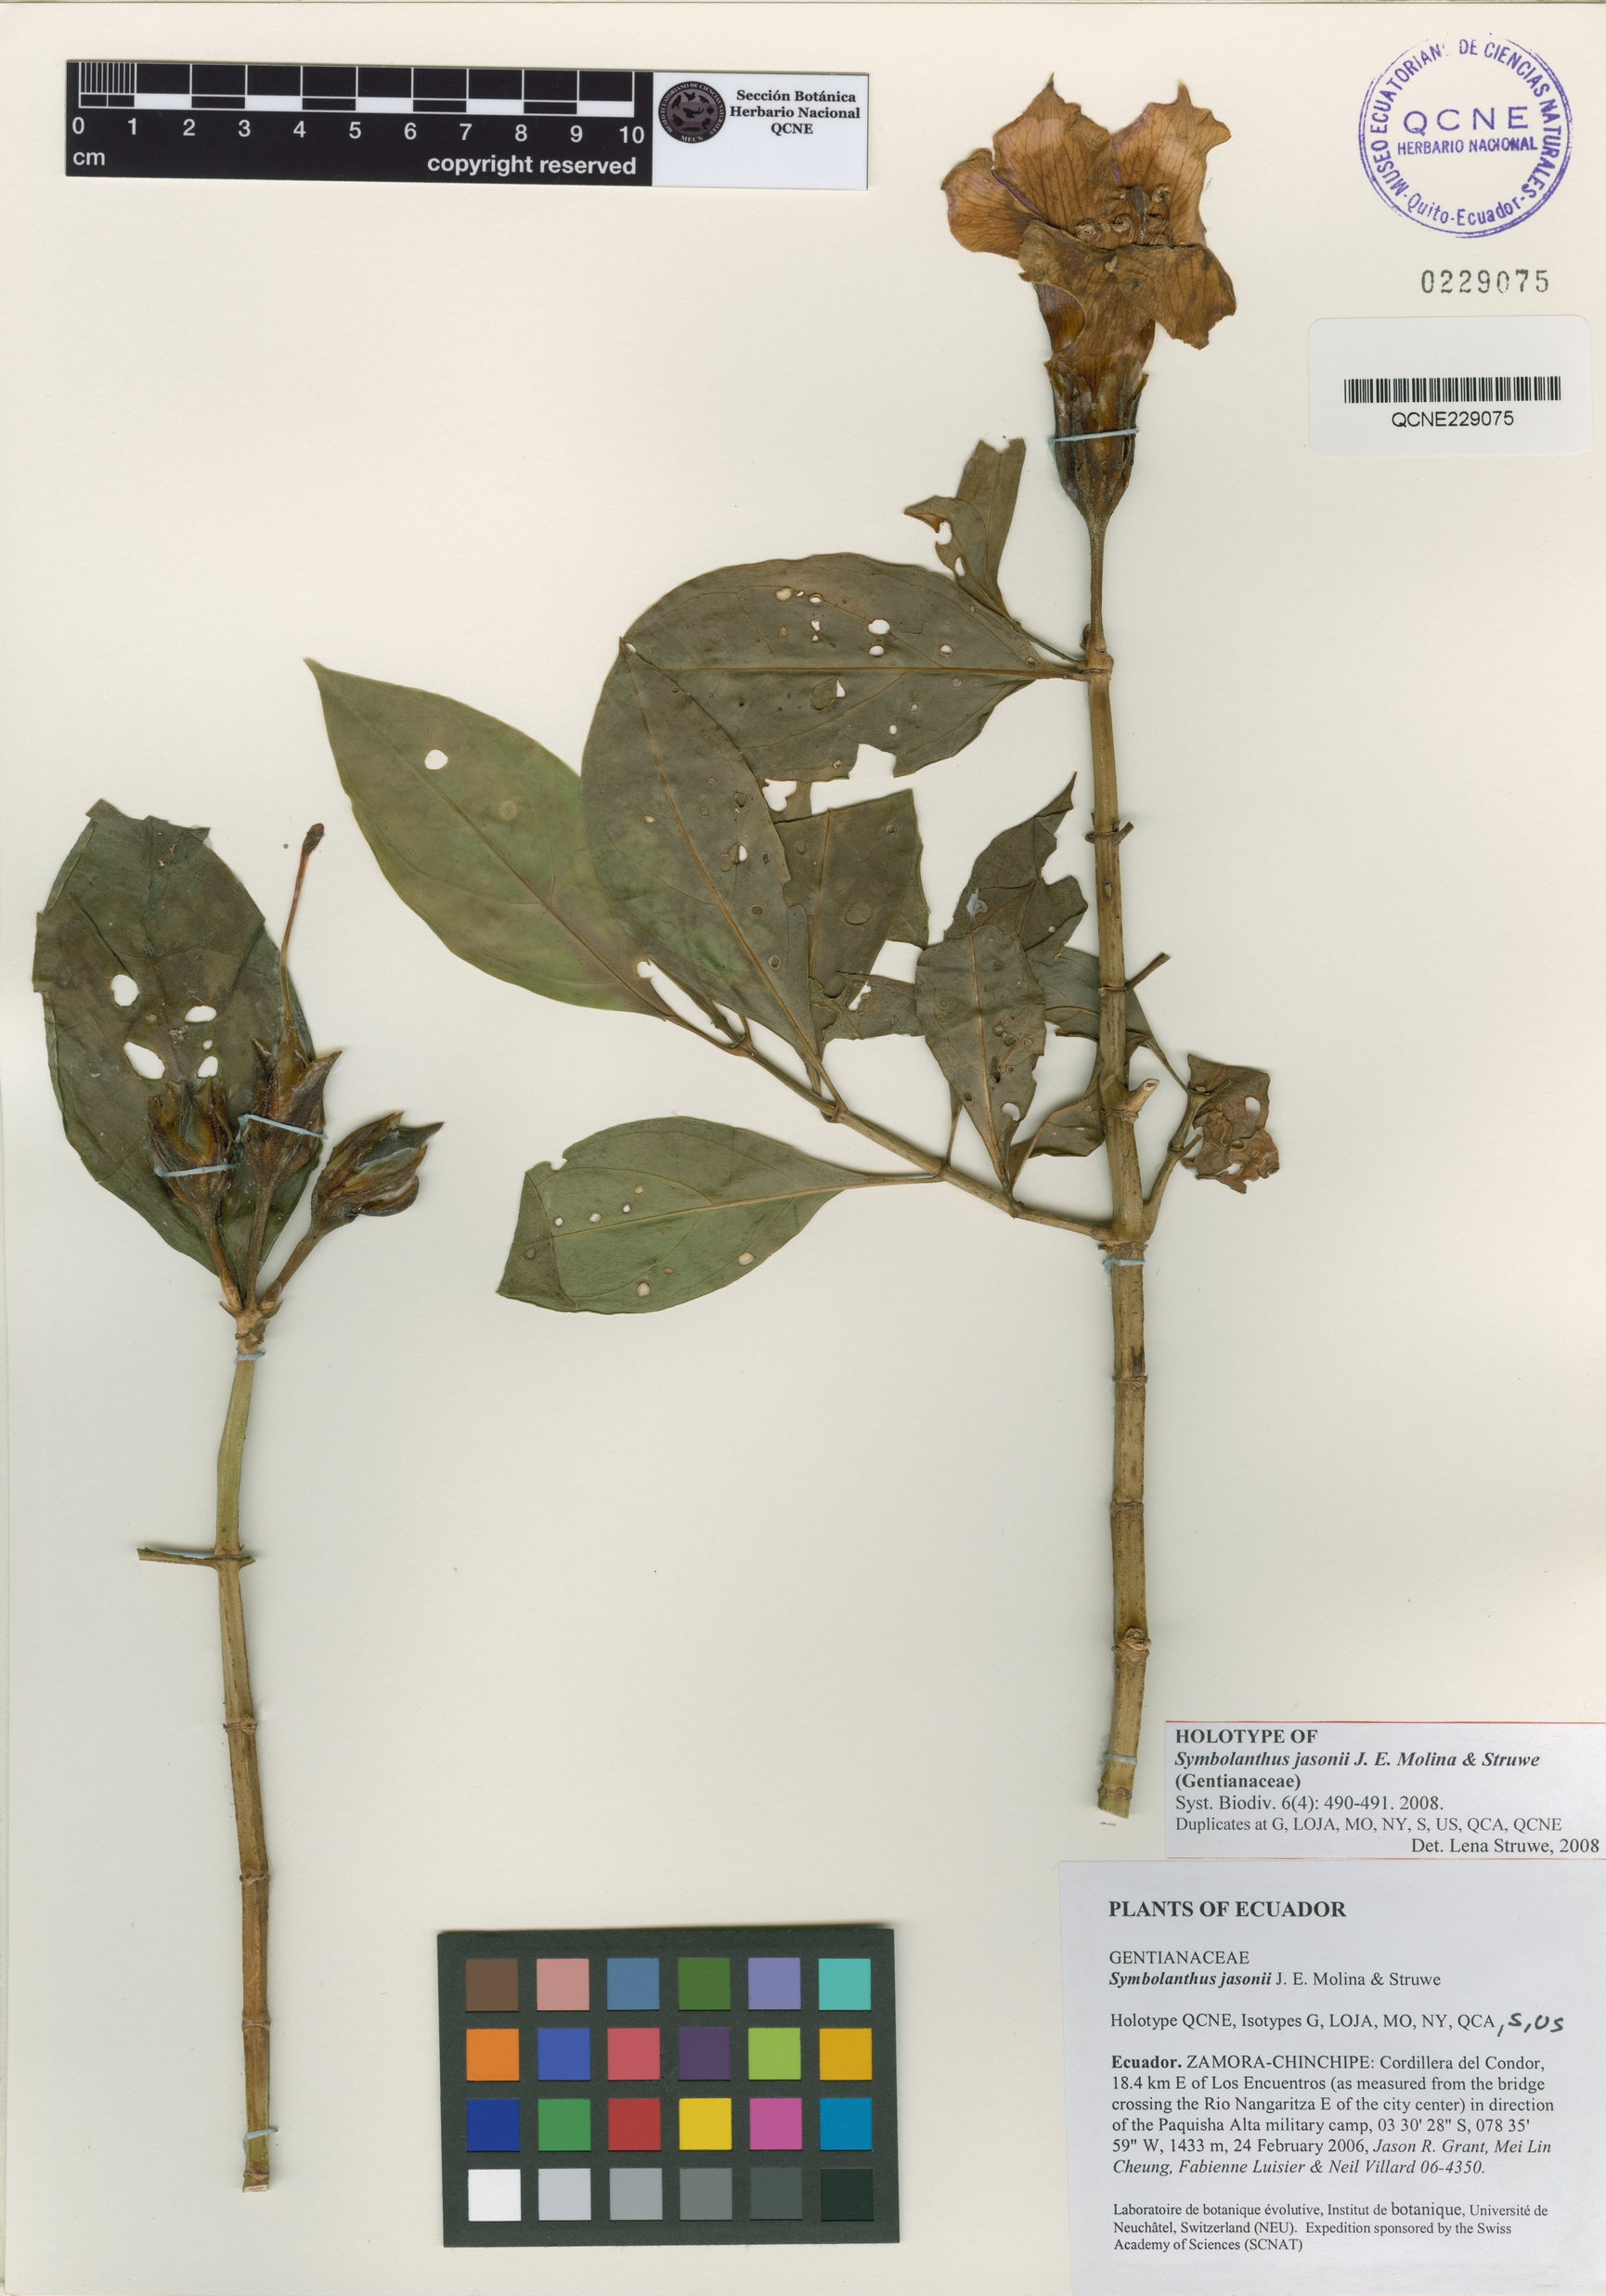 Symbolanthus image